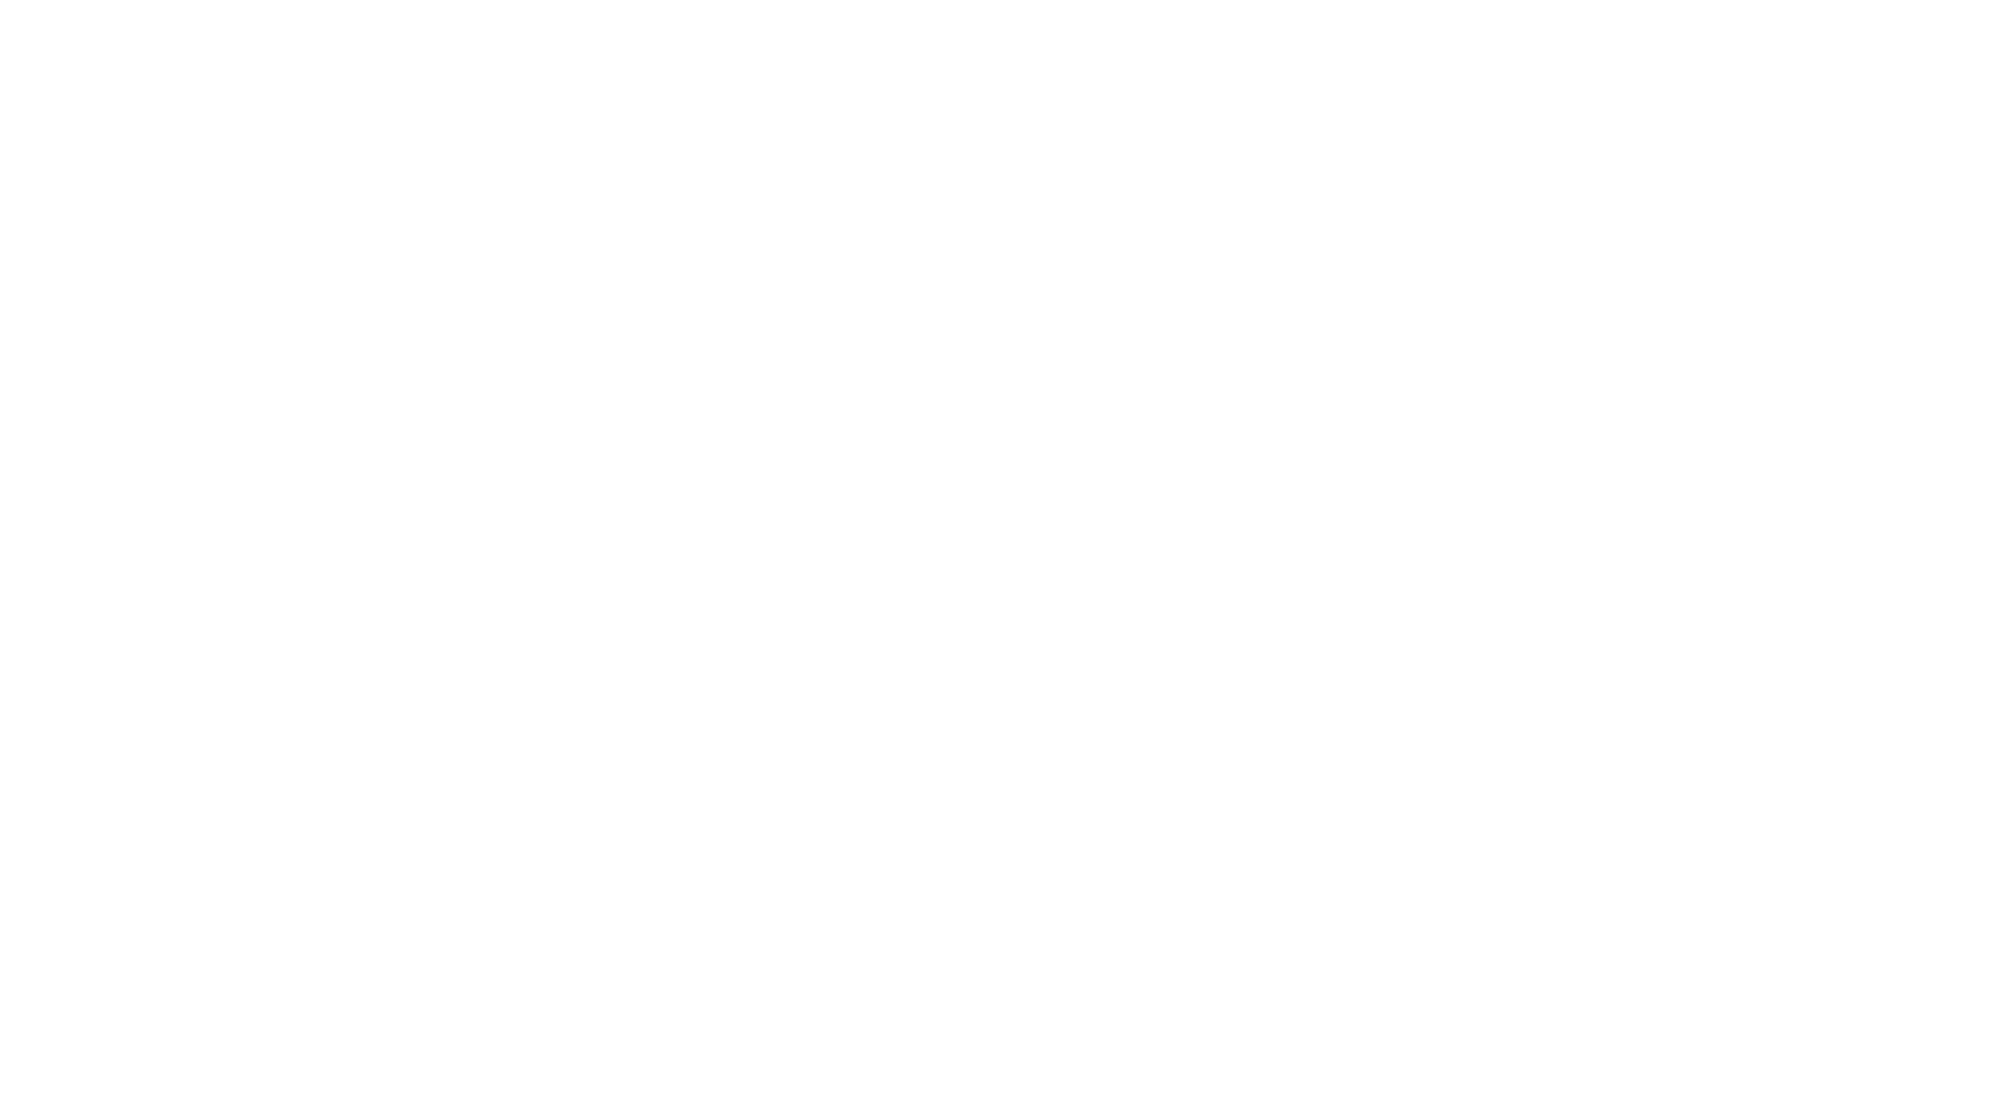 Mindfulness Advisory Group